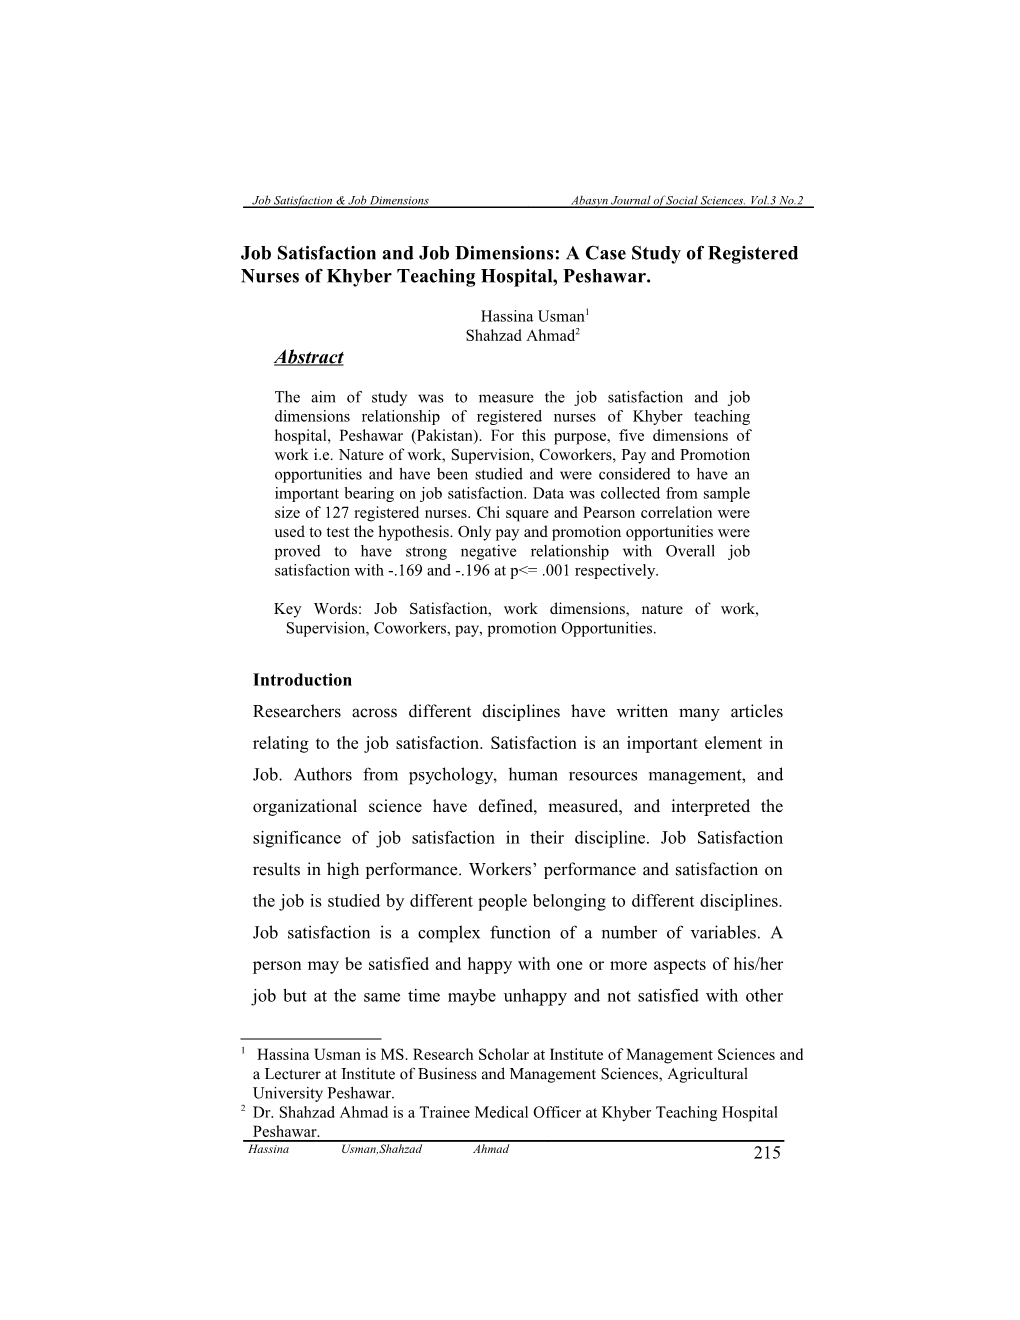 Decision Making & Good Governance Abasyn Journal Of Social Sciences. Vol.3, No.1